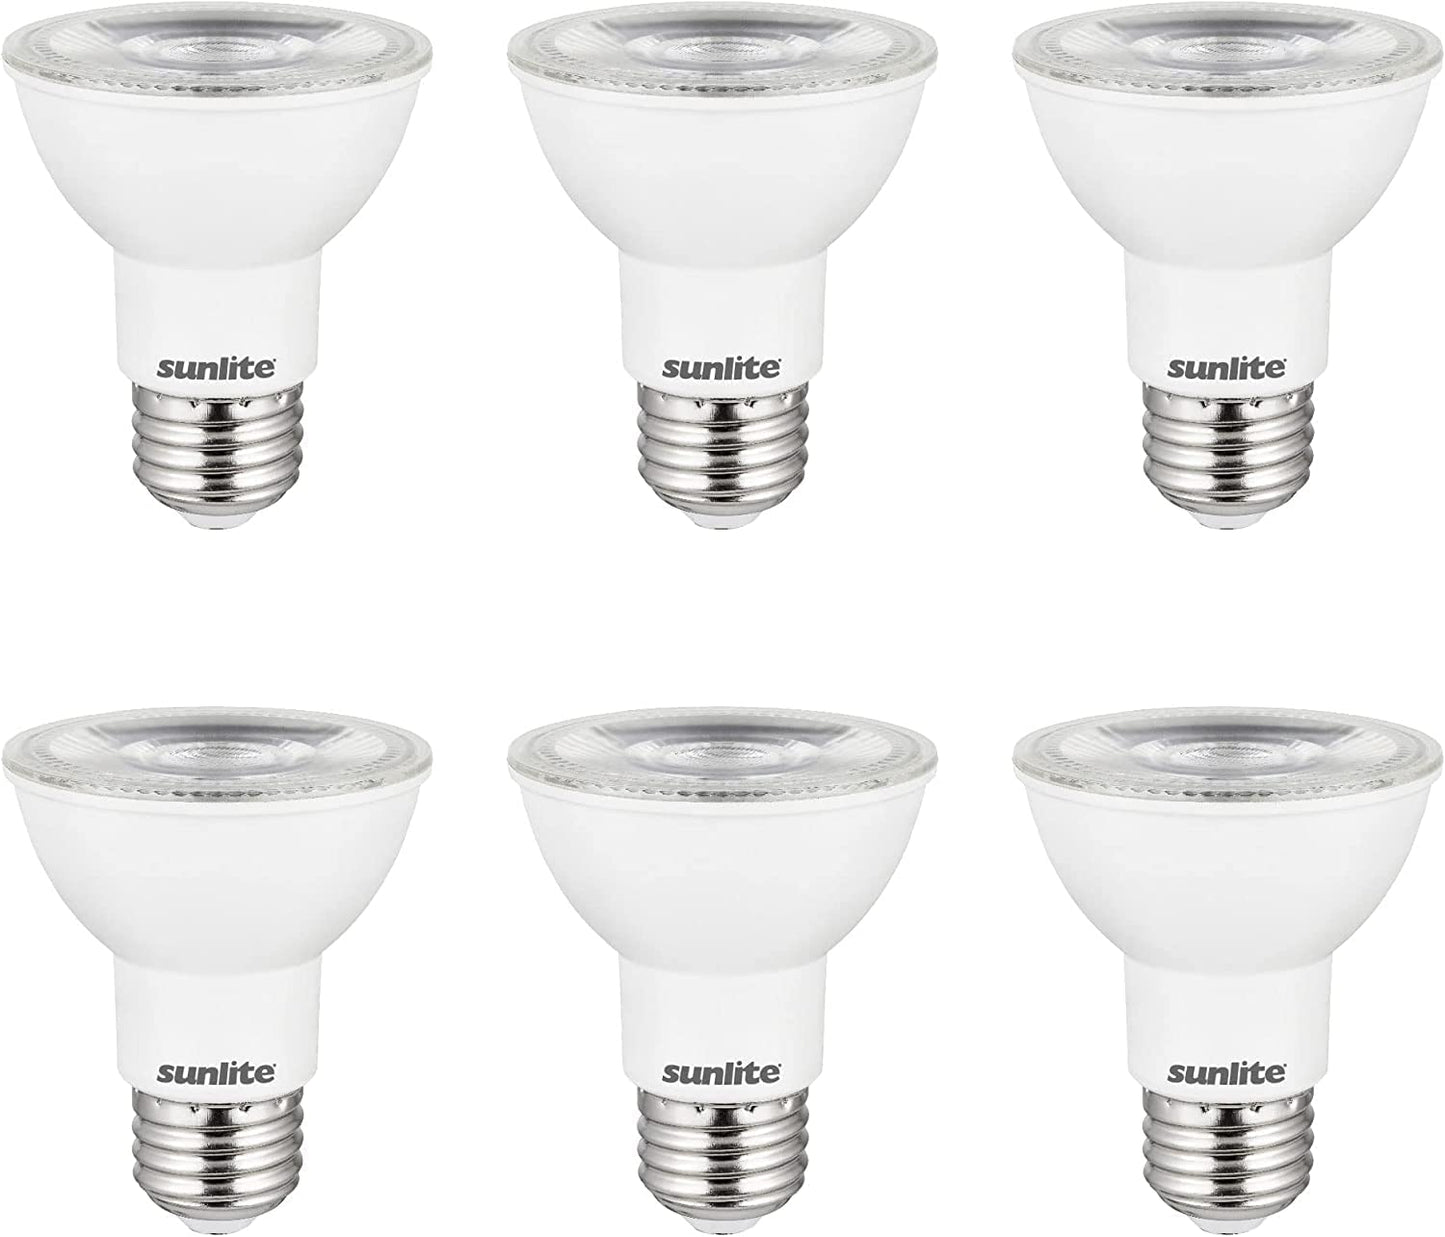 Sunlite 87930 LED PAR20 Long Neck Spotlight Bulb, 8 Watt (50W Halogen EQ), 500 Lm, 40° Flood Beam, Medium E26 Base, 90 CRI, Waterproof, Dimmable, T20/T24/CEC & UL Listed, 2700K Warm White, 6 Count